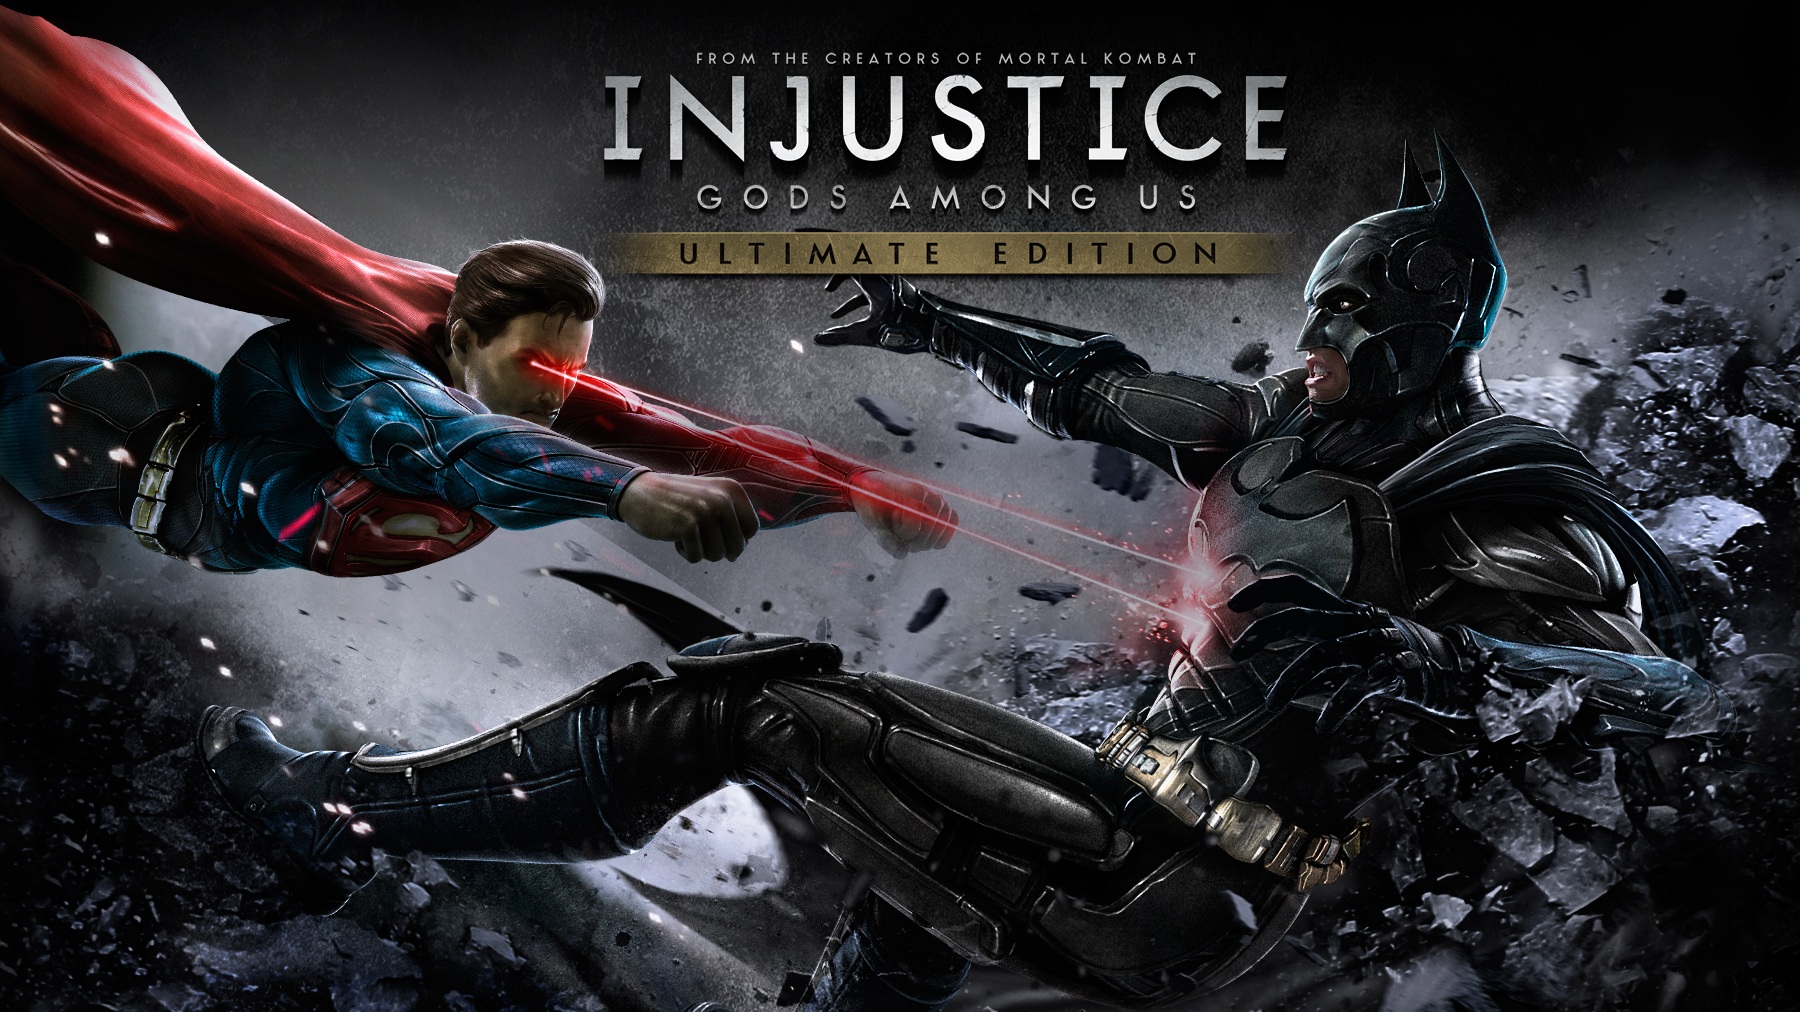 Injustice Gods Among Us Ultimate Edition doakoa da!